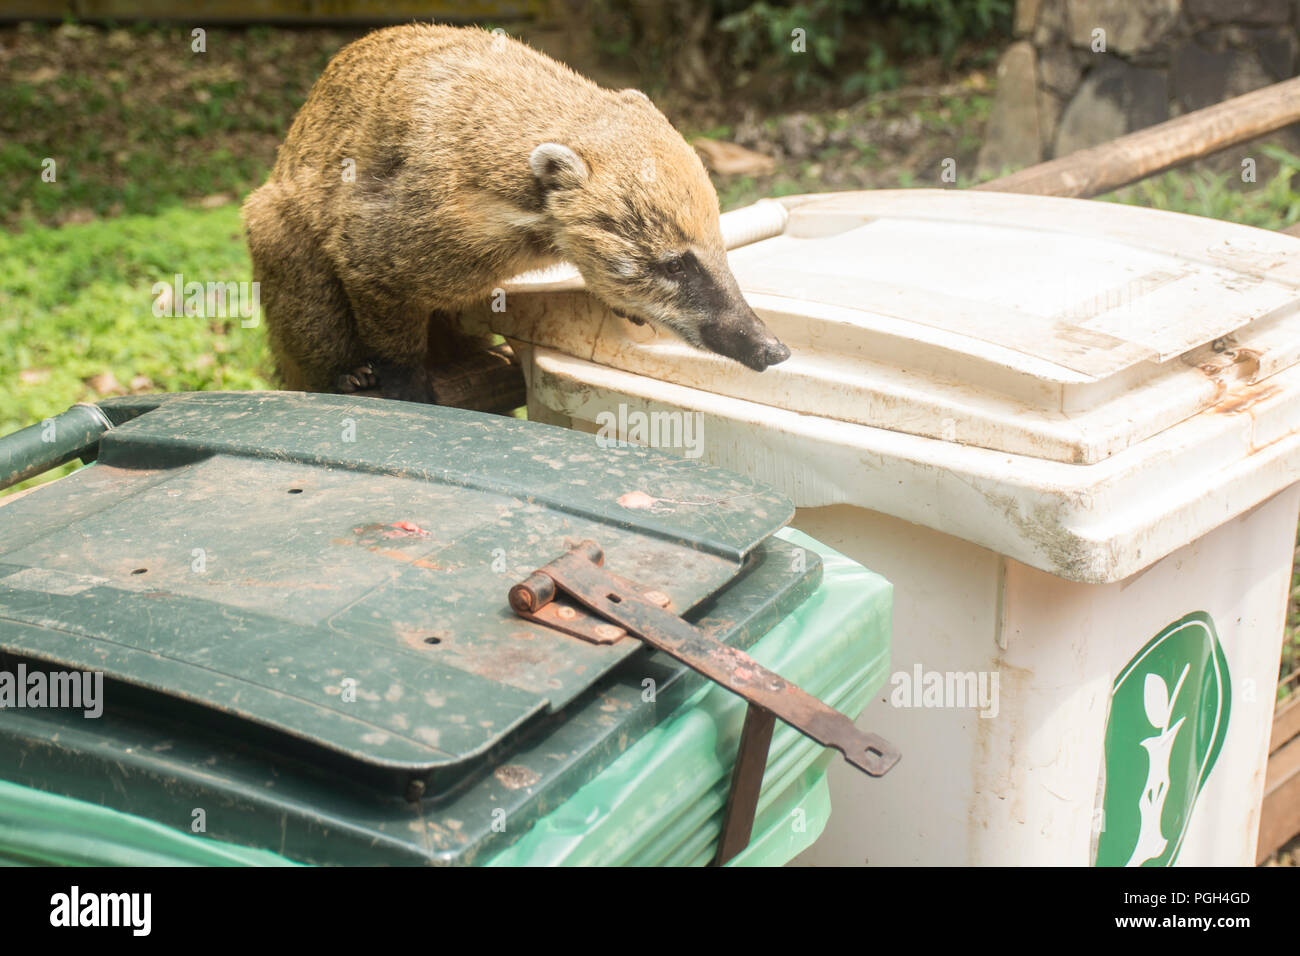 South american coati (nasua nasua) digging in the trash, Iguazu National Park, Misiones, Argentina, South America Stock Photo